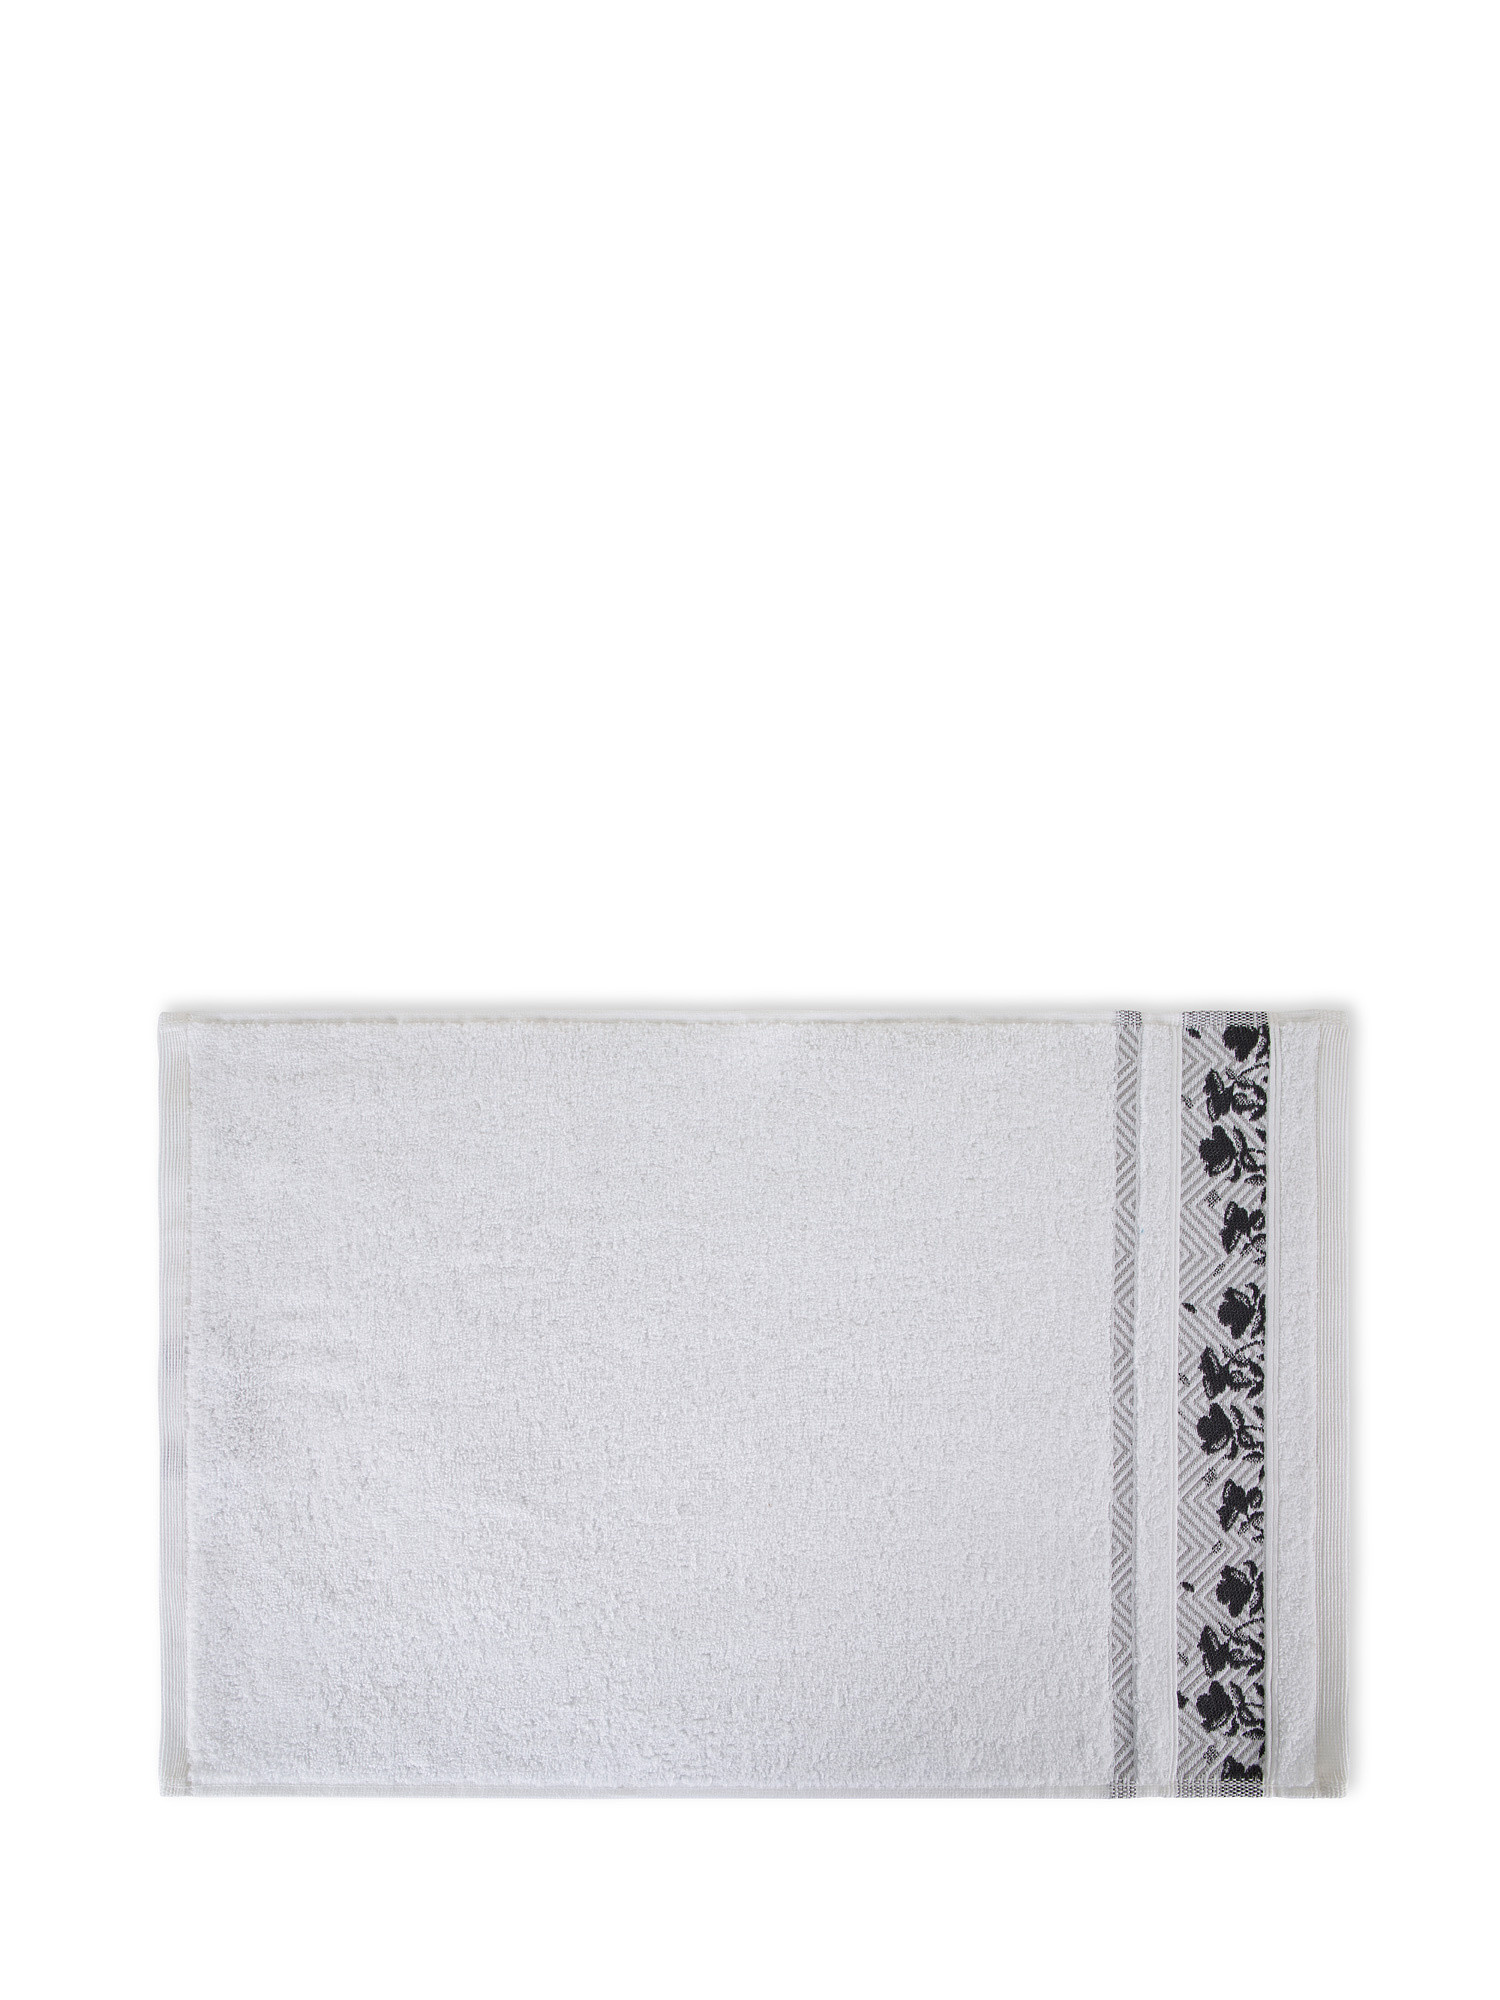 Set 2 asciugamani spugna di cotone bordo floreale, Bianco, large image number 1